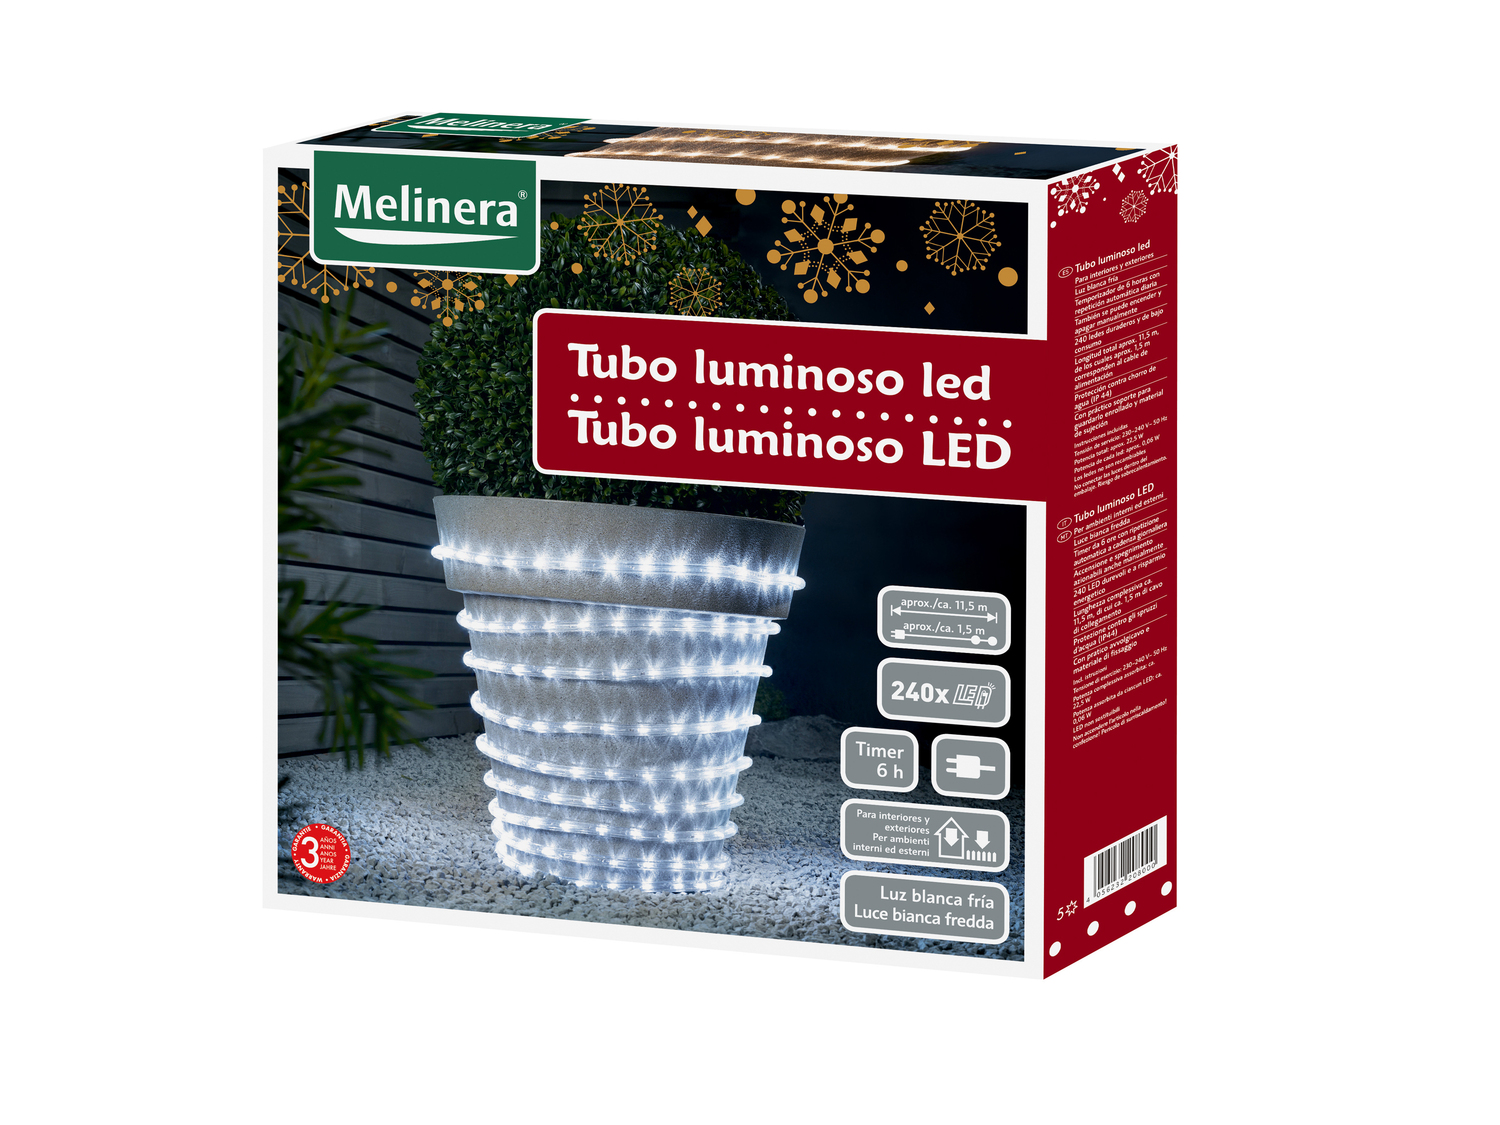 Tubo luminoso LED Melinera, le prix 14.99 &#8364; 
- Per interni ed esterni
- ...